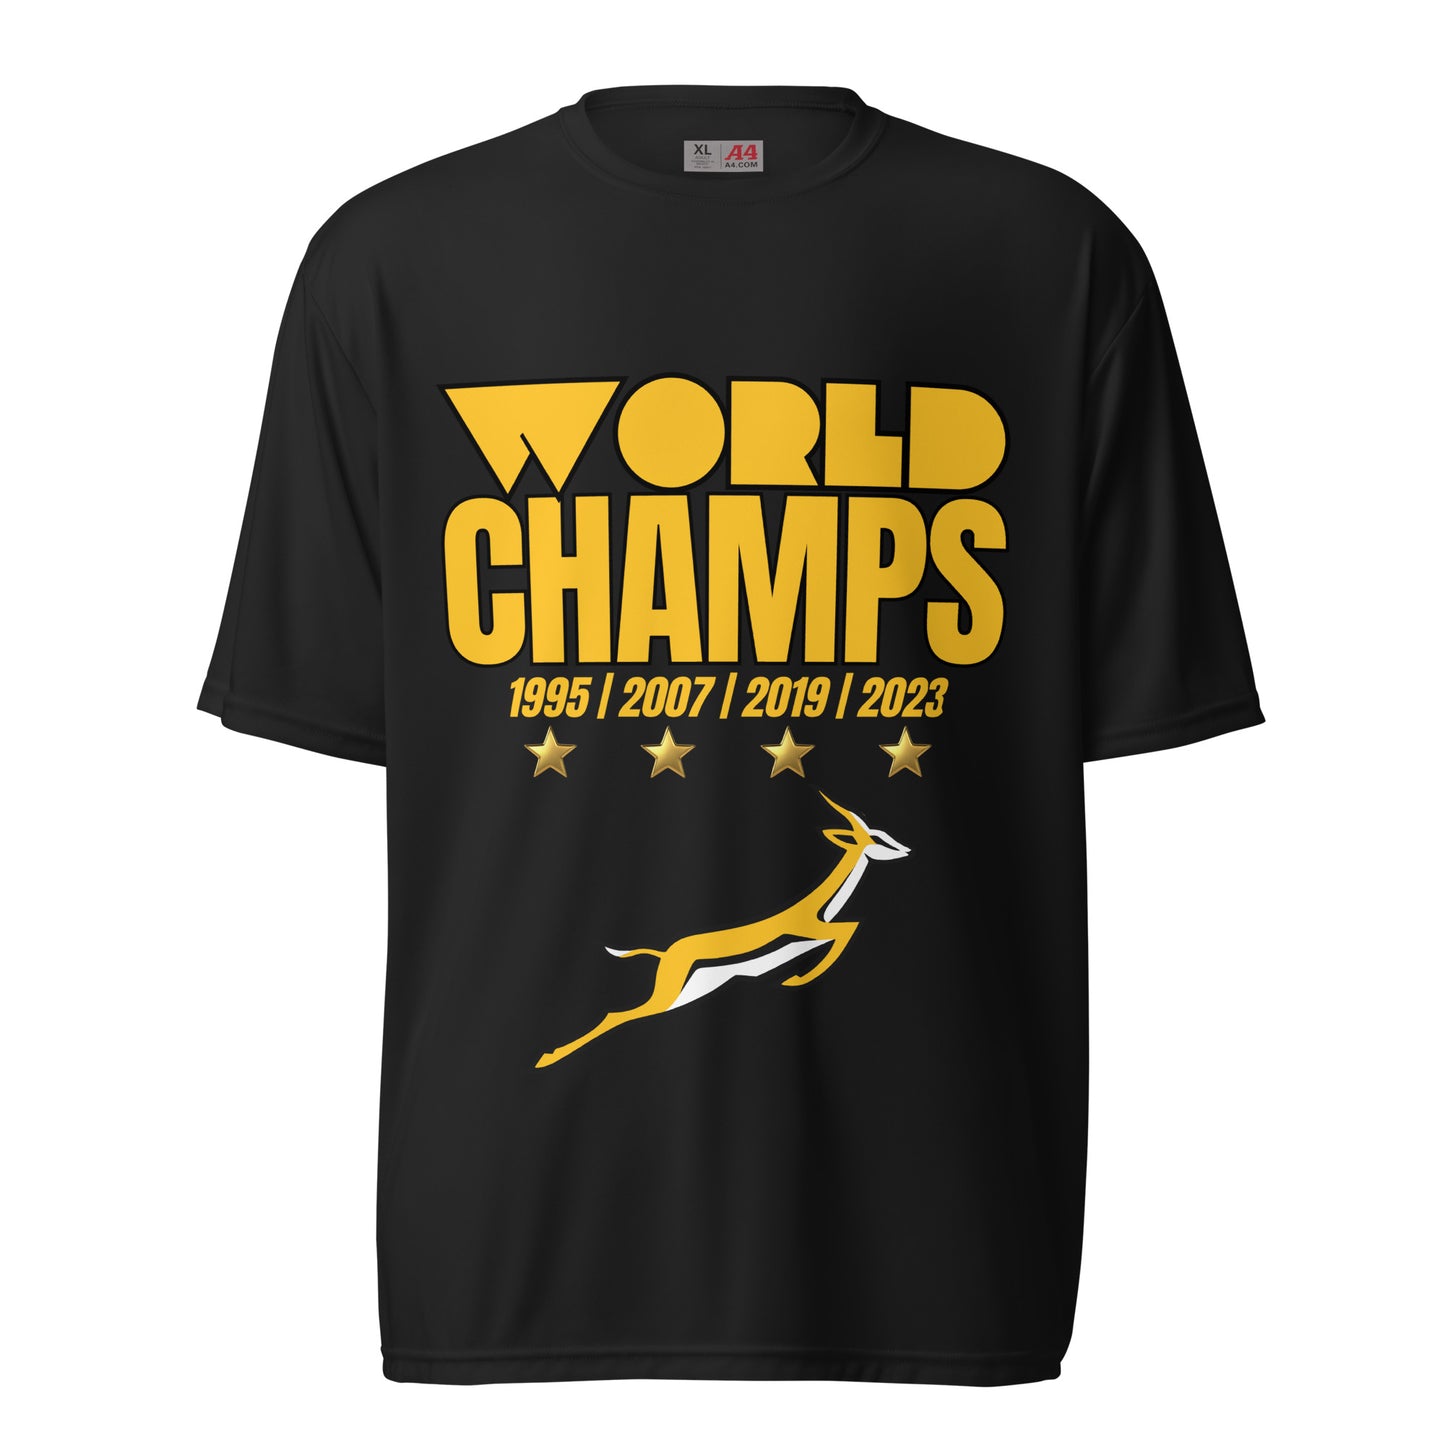 Unisex performance crew neck Springboks World Champs (Gold) t-shirt